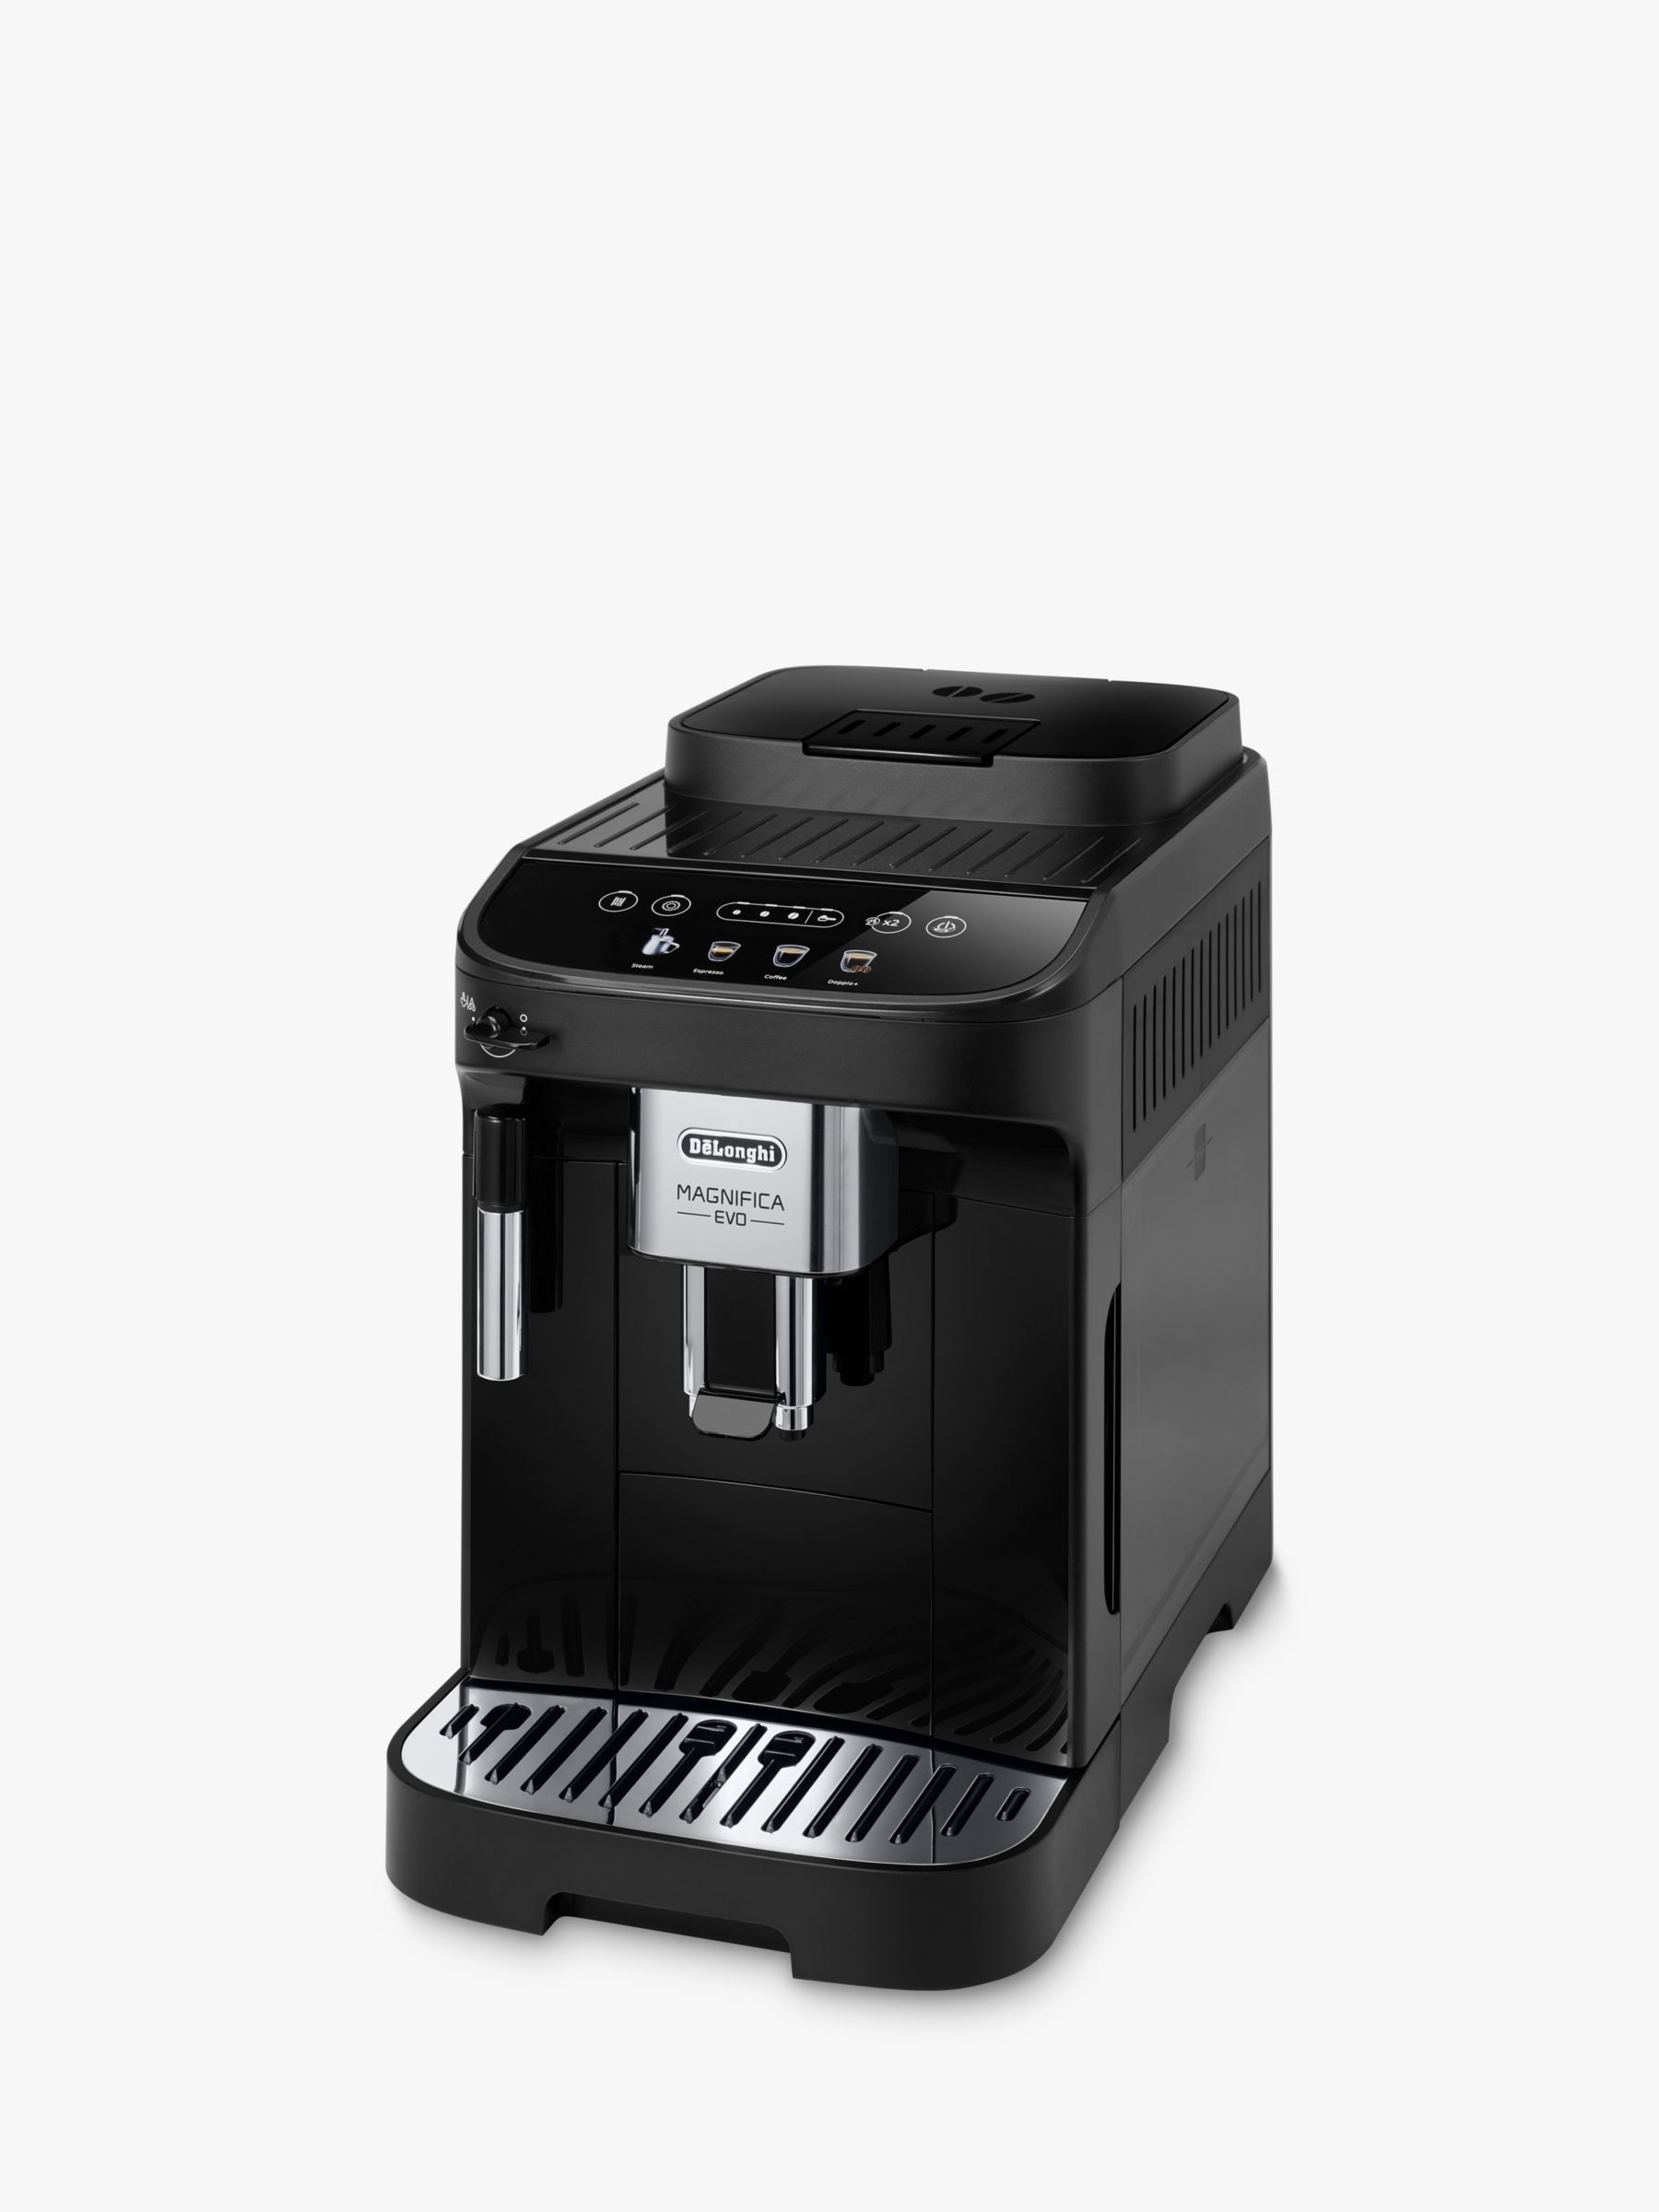 De'Longhi Magnifica Evo Automatic Coffee and Espresso Machine + Reviews